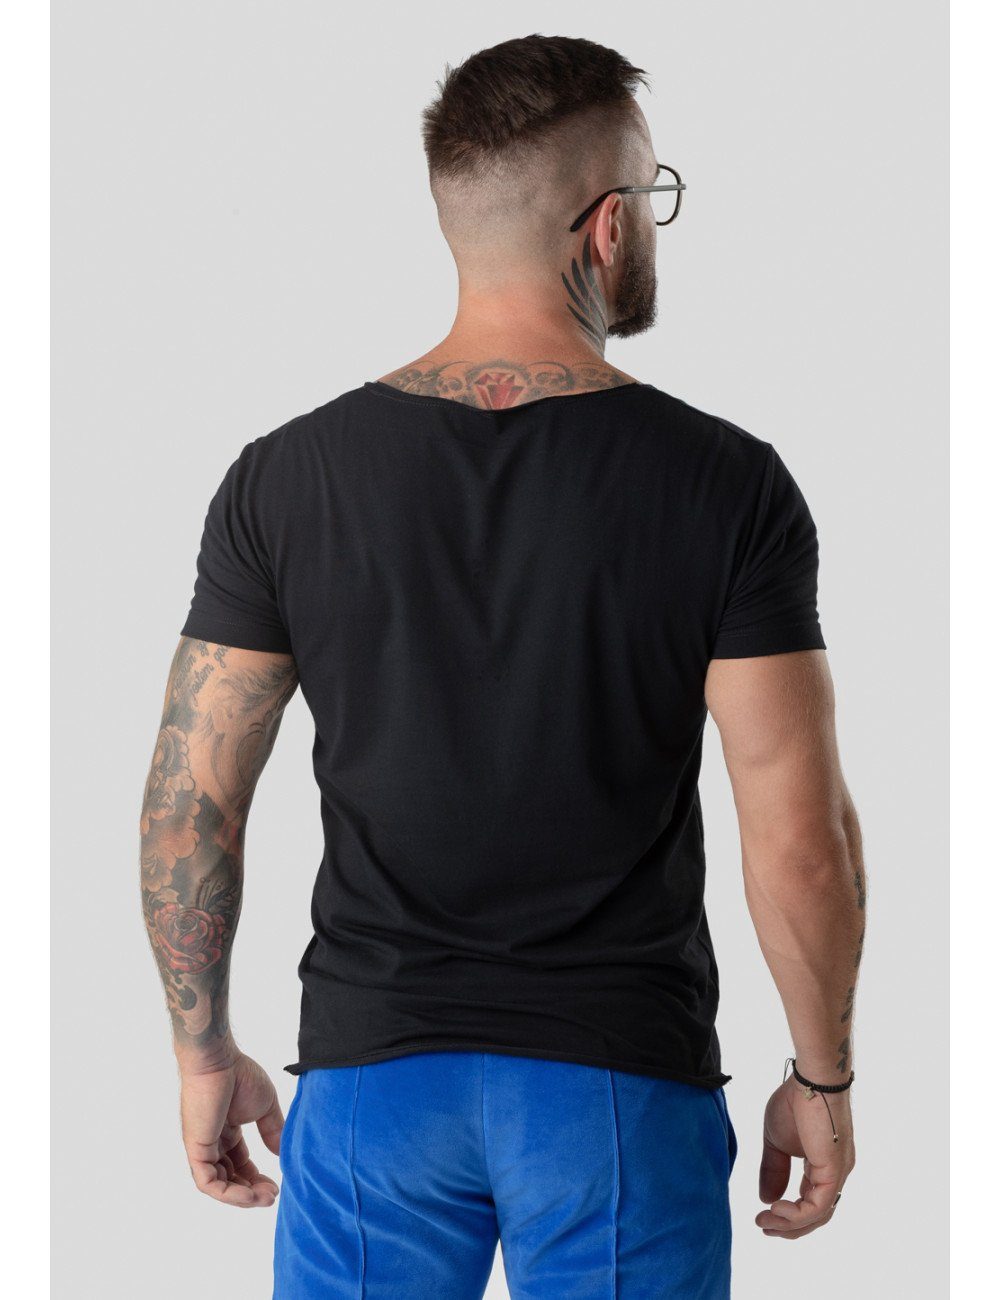 Logostrickerei V-Neck Schwarz AMIGOS TRES Shirt Trendiges T-Shirt mit